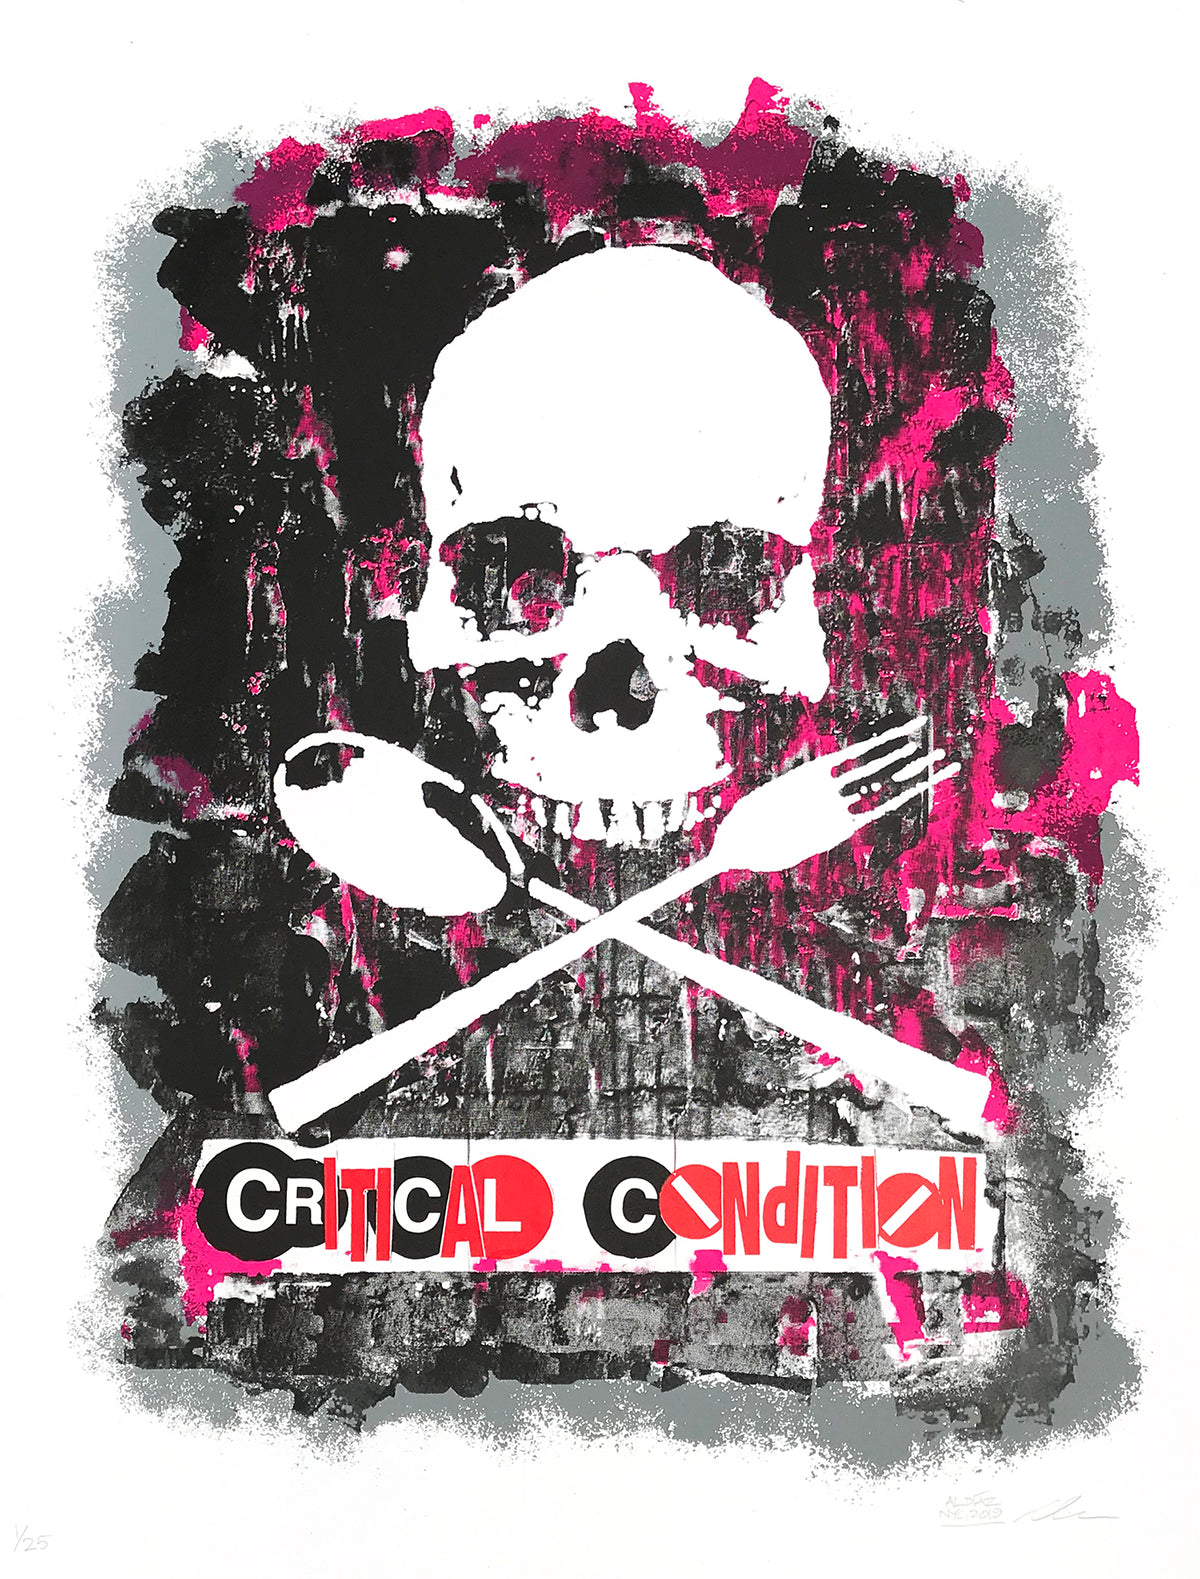 Al Diaz and Dave Navarro &quot;Critical Condition&quot; - 4 Color Screen Print, Limited Edition of 25 - 19 x 25&quot;